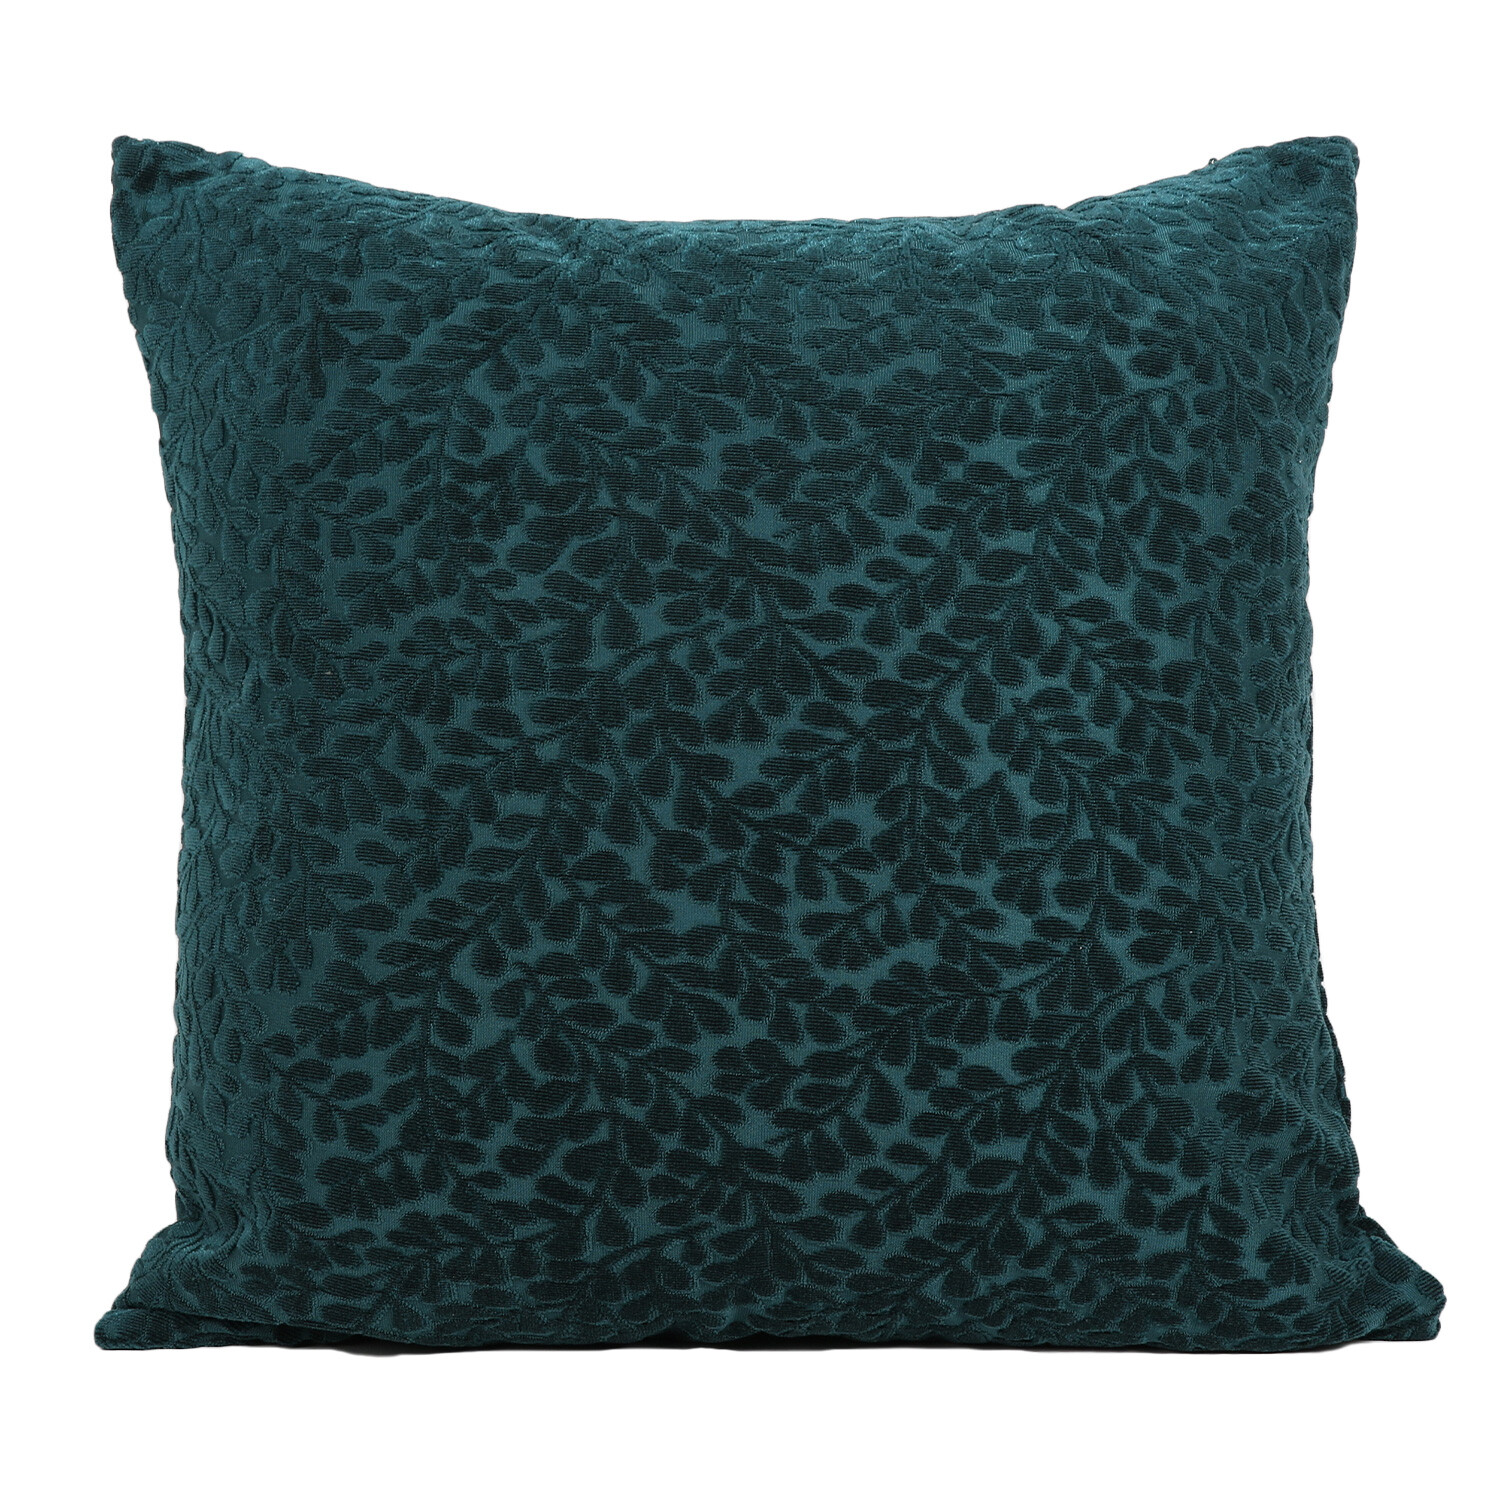 Delilah Jacquard Cushion - Green Image 1